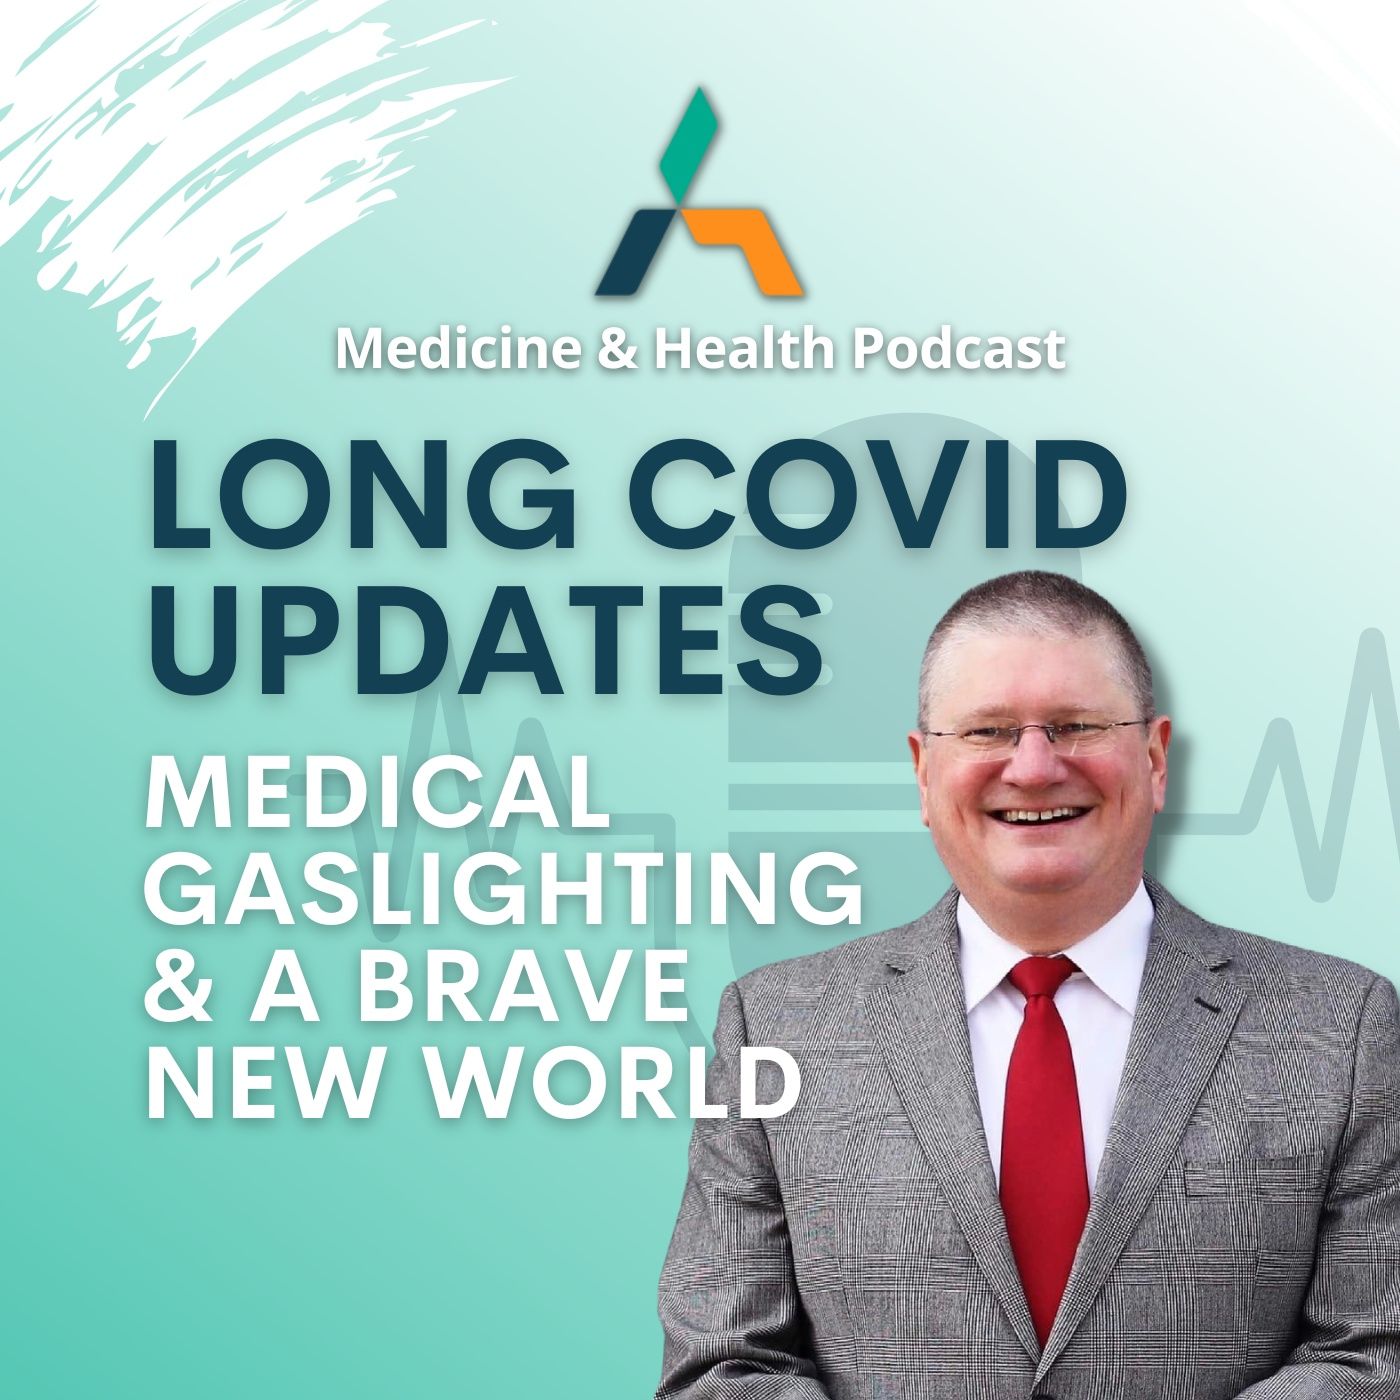 LONG COVID UPDATES - MEDICAL GASLIGHTING & A BRAVE NEW WORLD